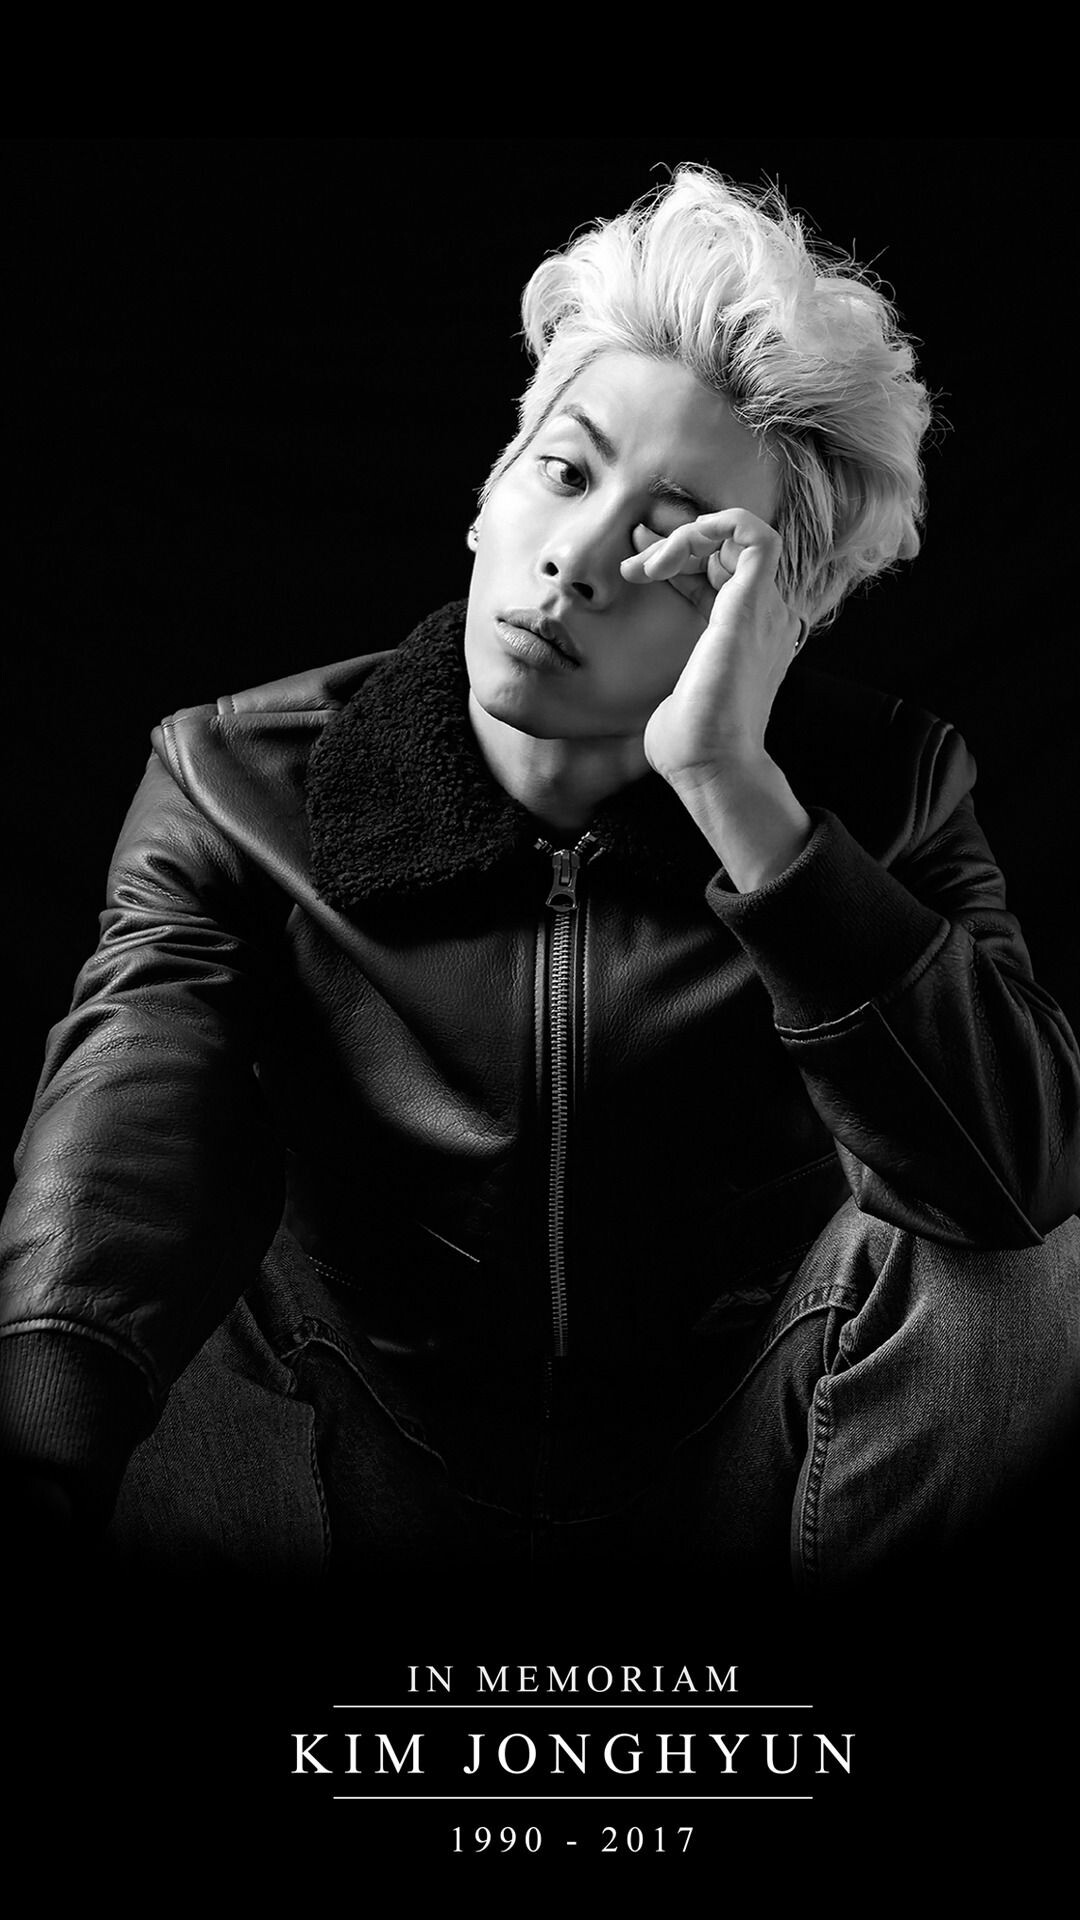 SHINee: Kim Jonghyun, released his first EP album, Base, in January 2015. 1080x1920 Full HD Wallpaper.